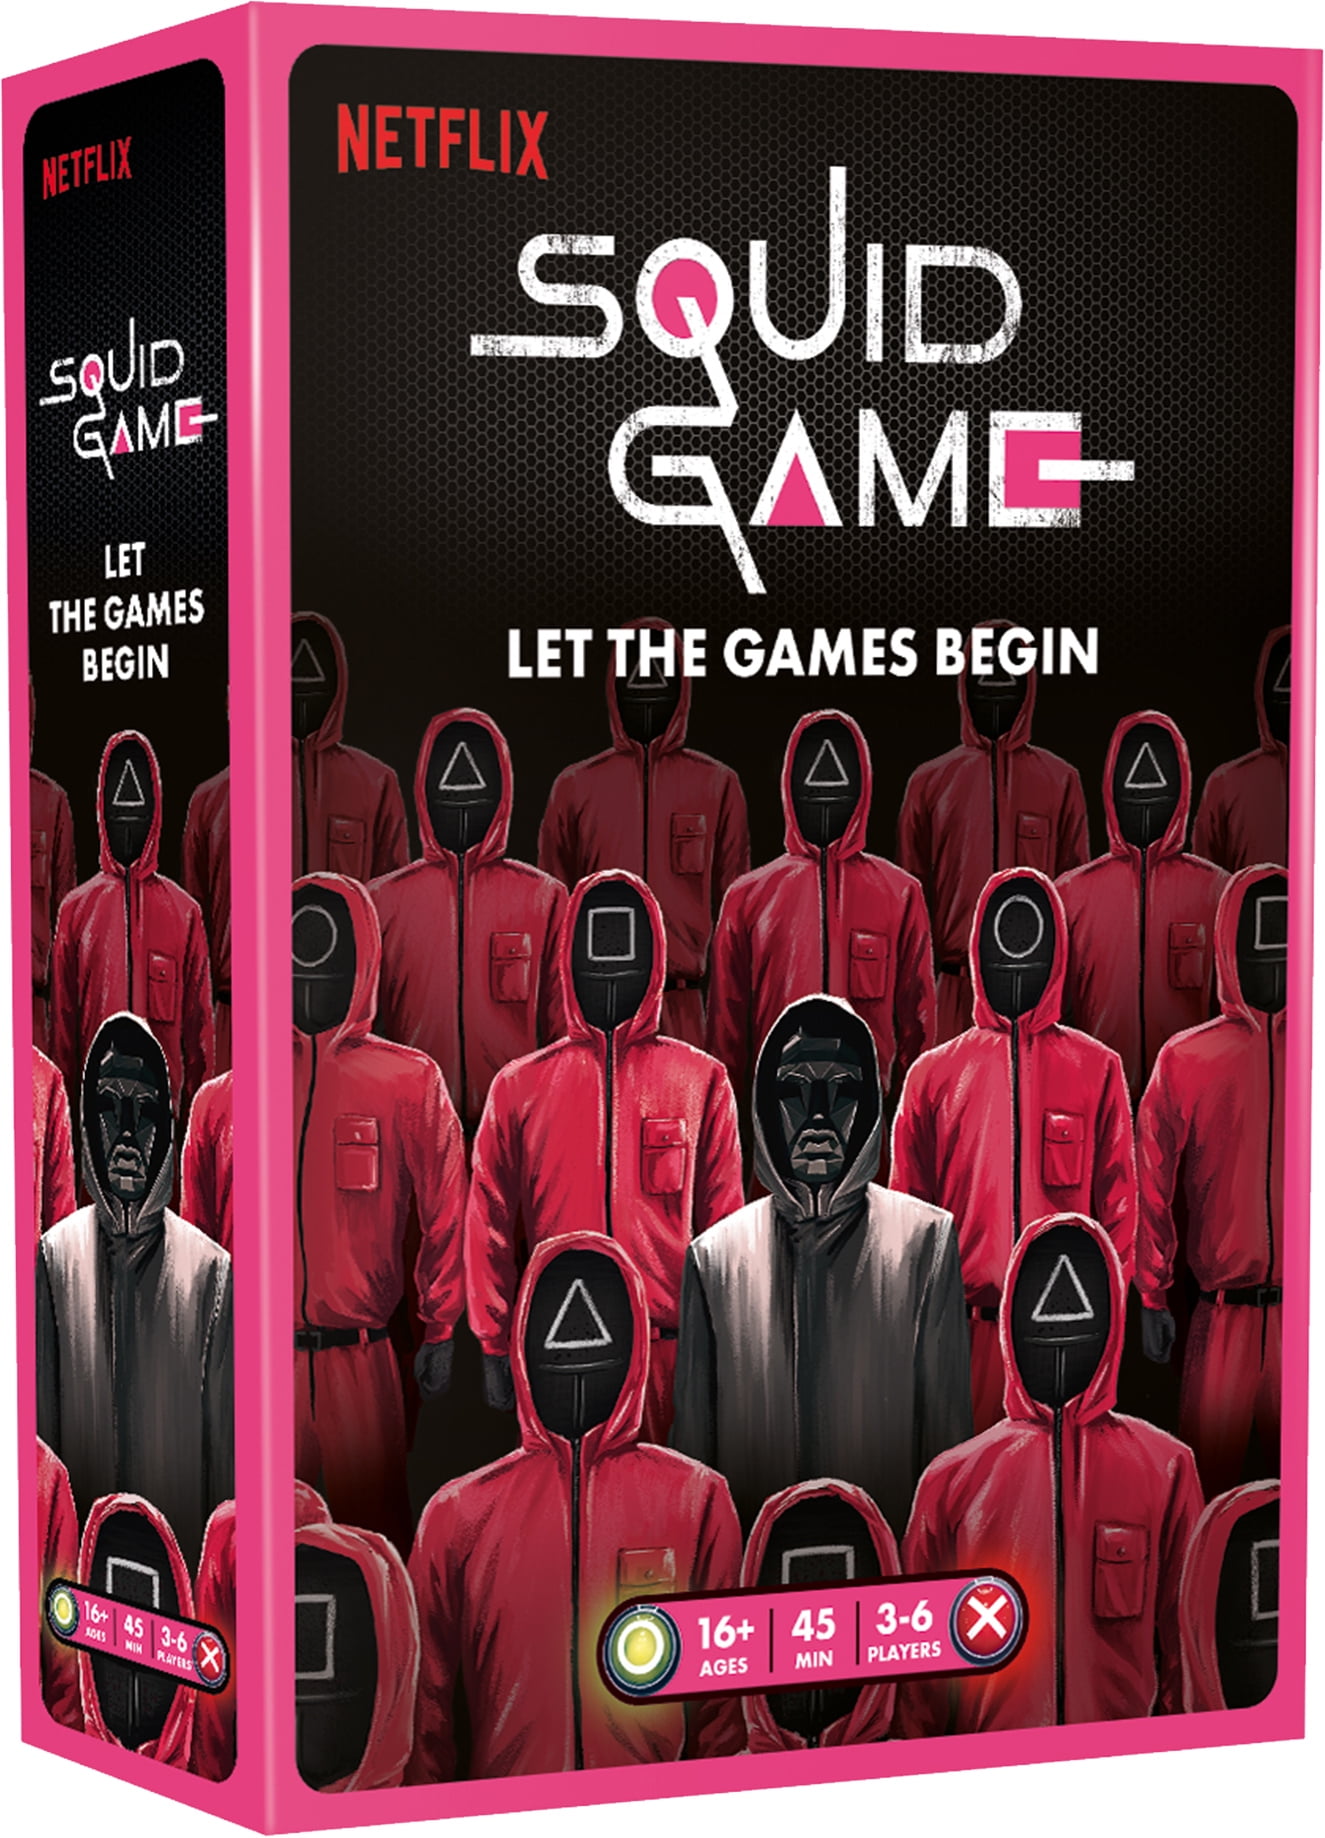 Netflix Squid Game Board Game $4.77 + Free Store Pickup at Walmart, FS w/ Walmart+ or on $35+